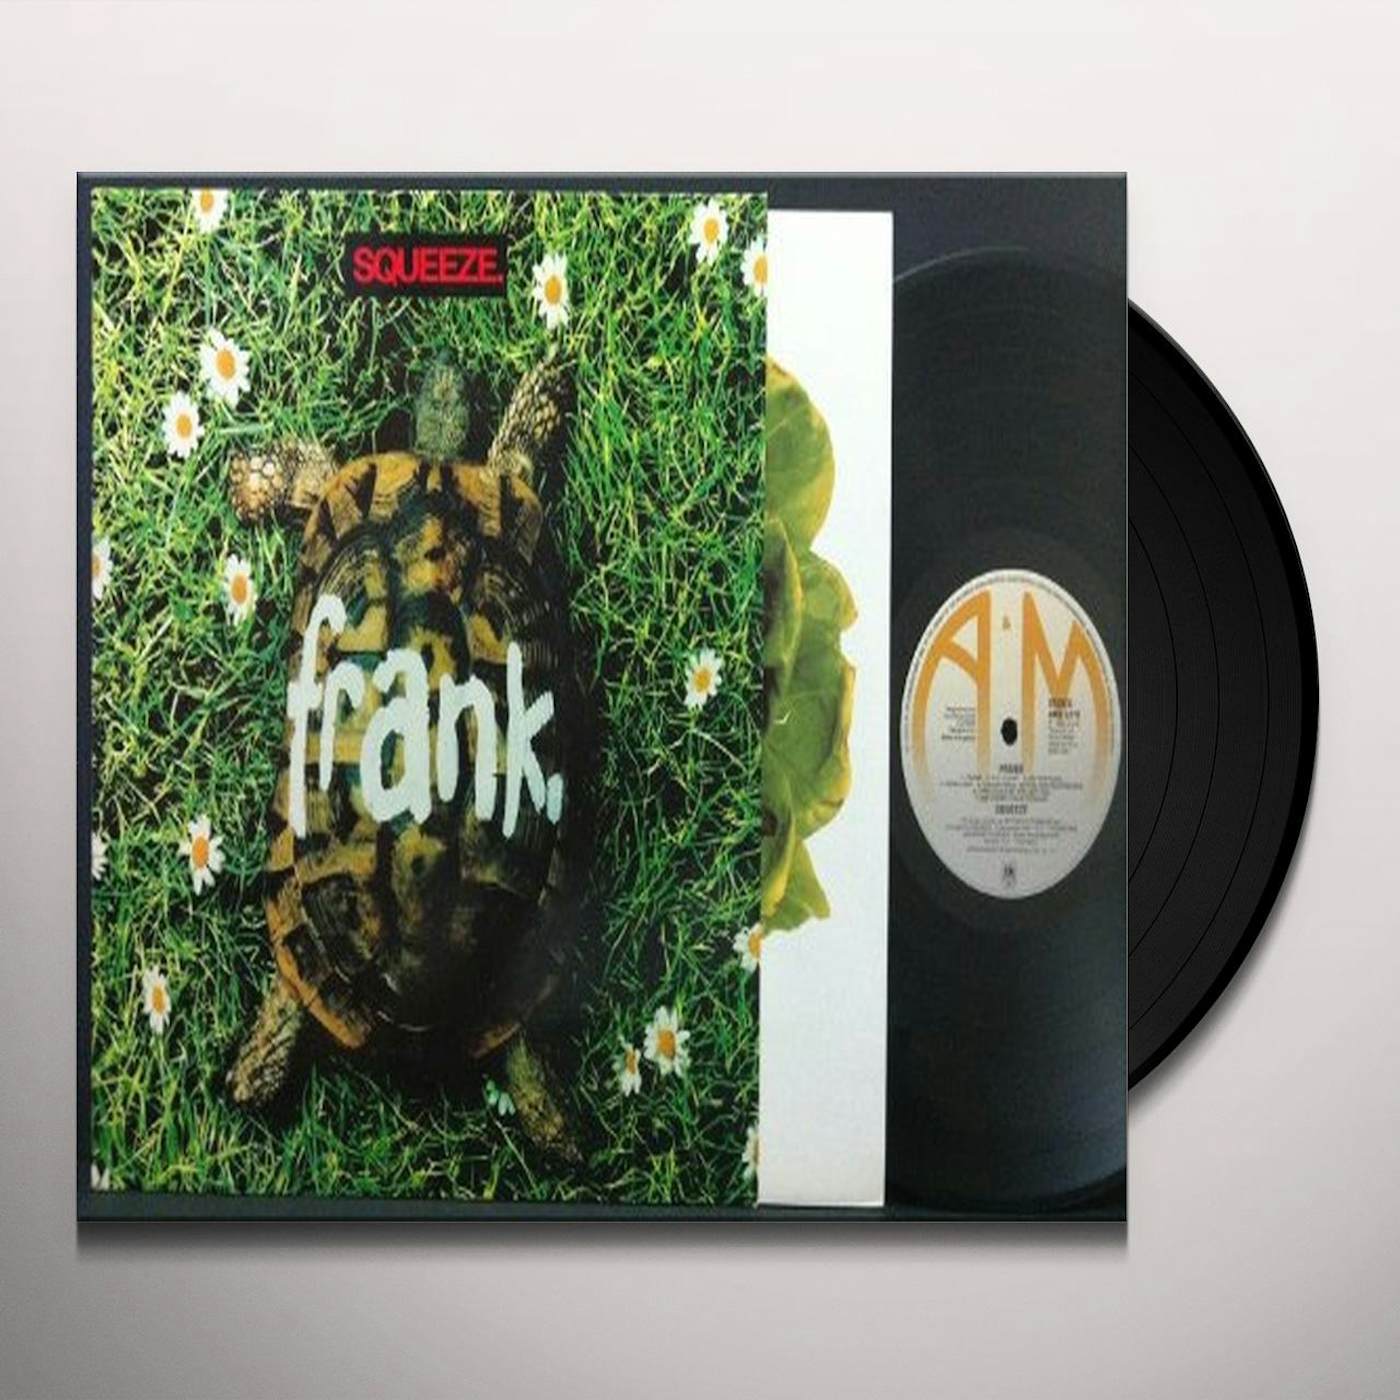 Squeeze Frank Vinyl Record